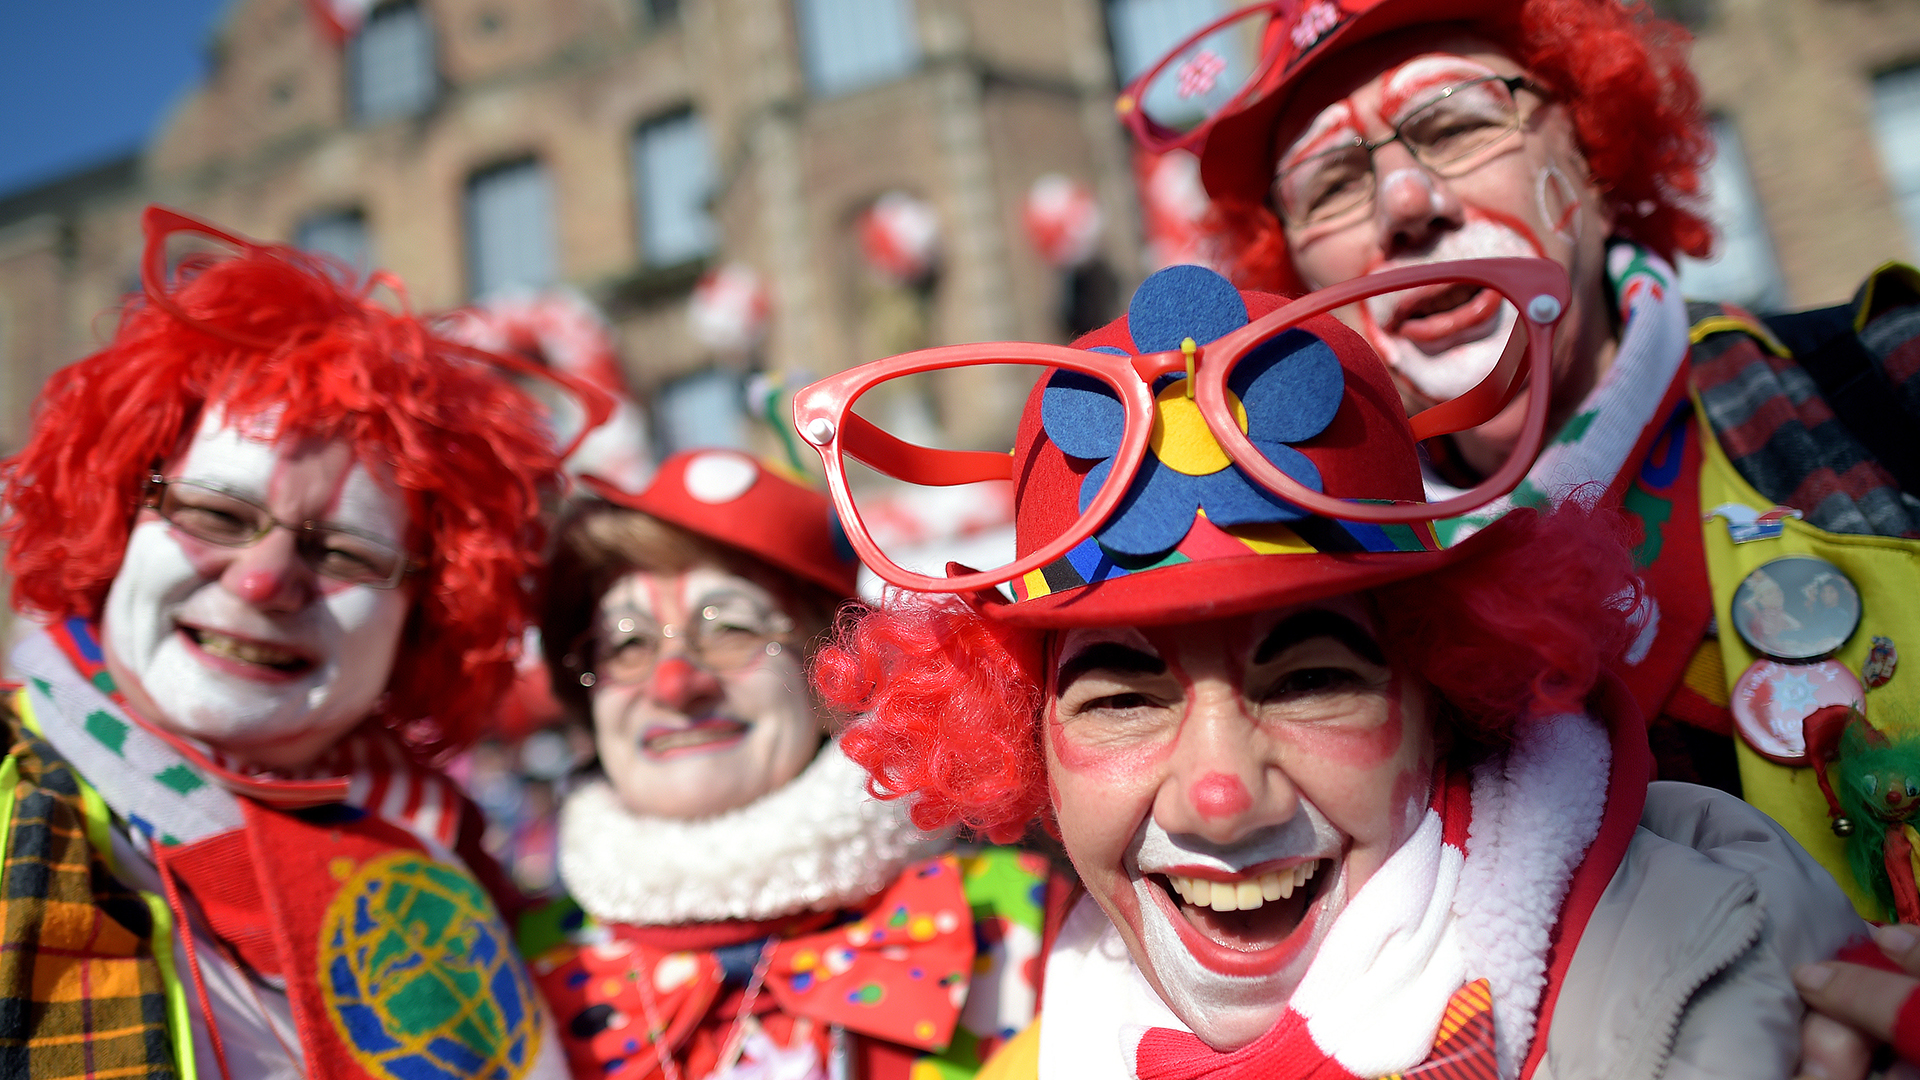 Clowns feiern in Düsseldorf beim Rosenmontagszug | dpa